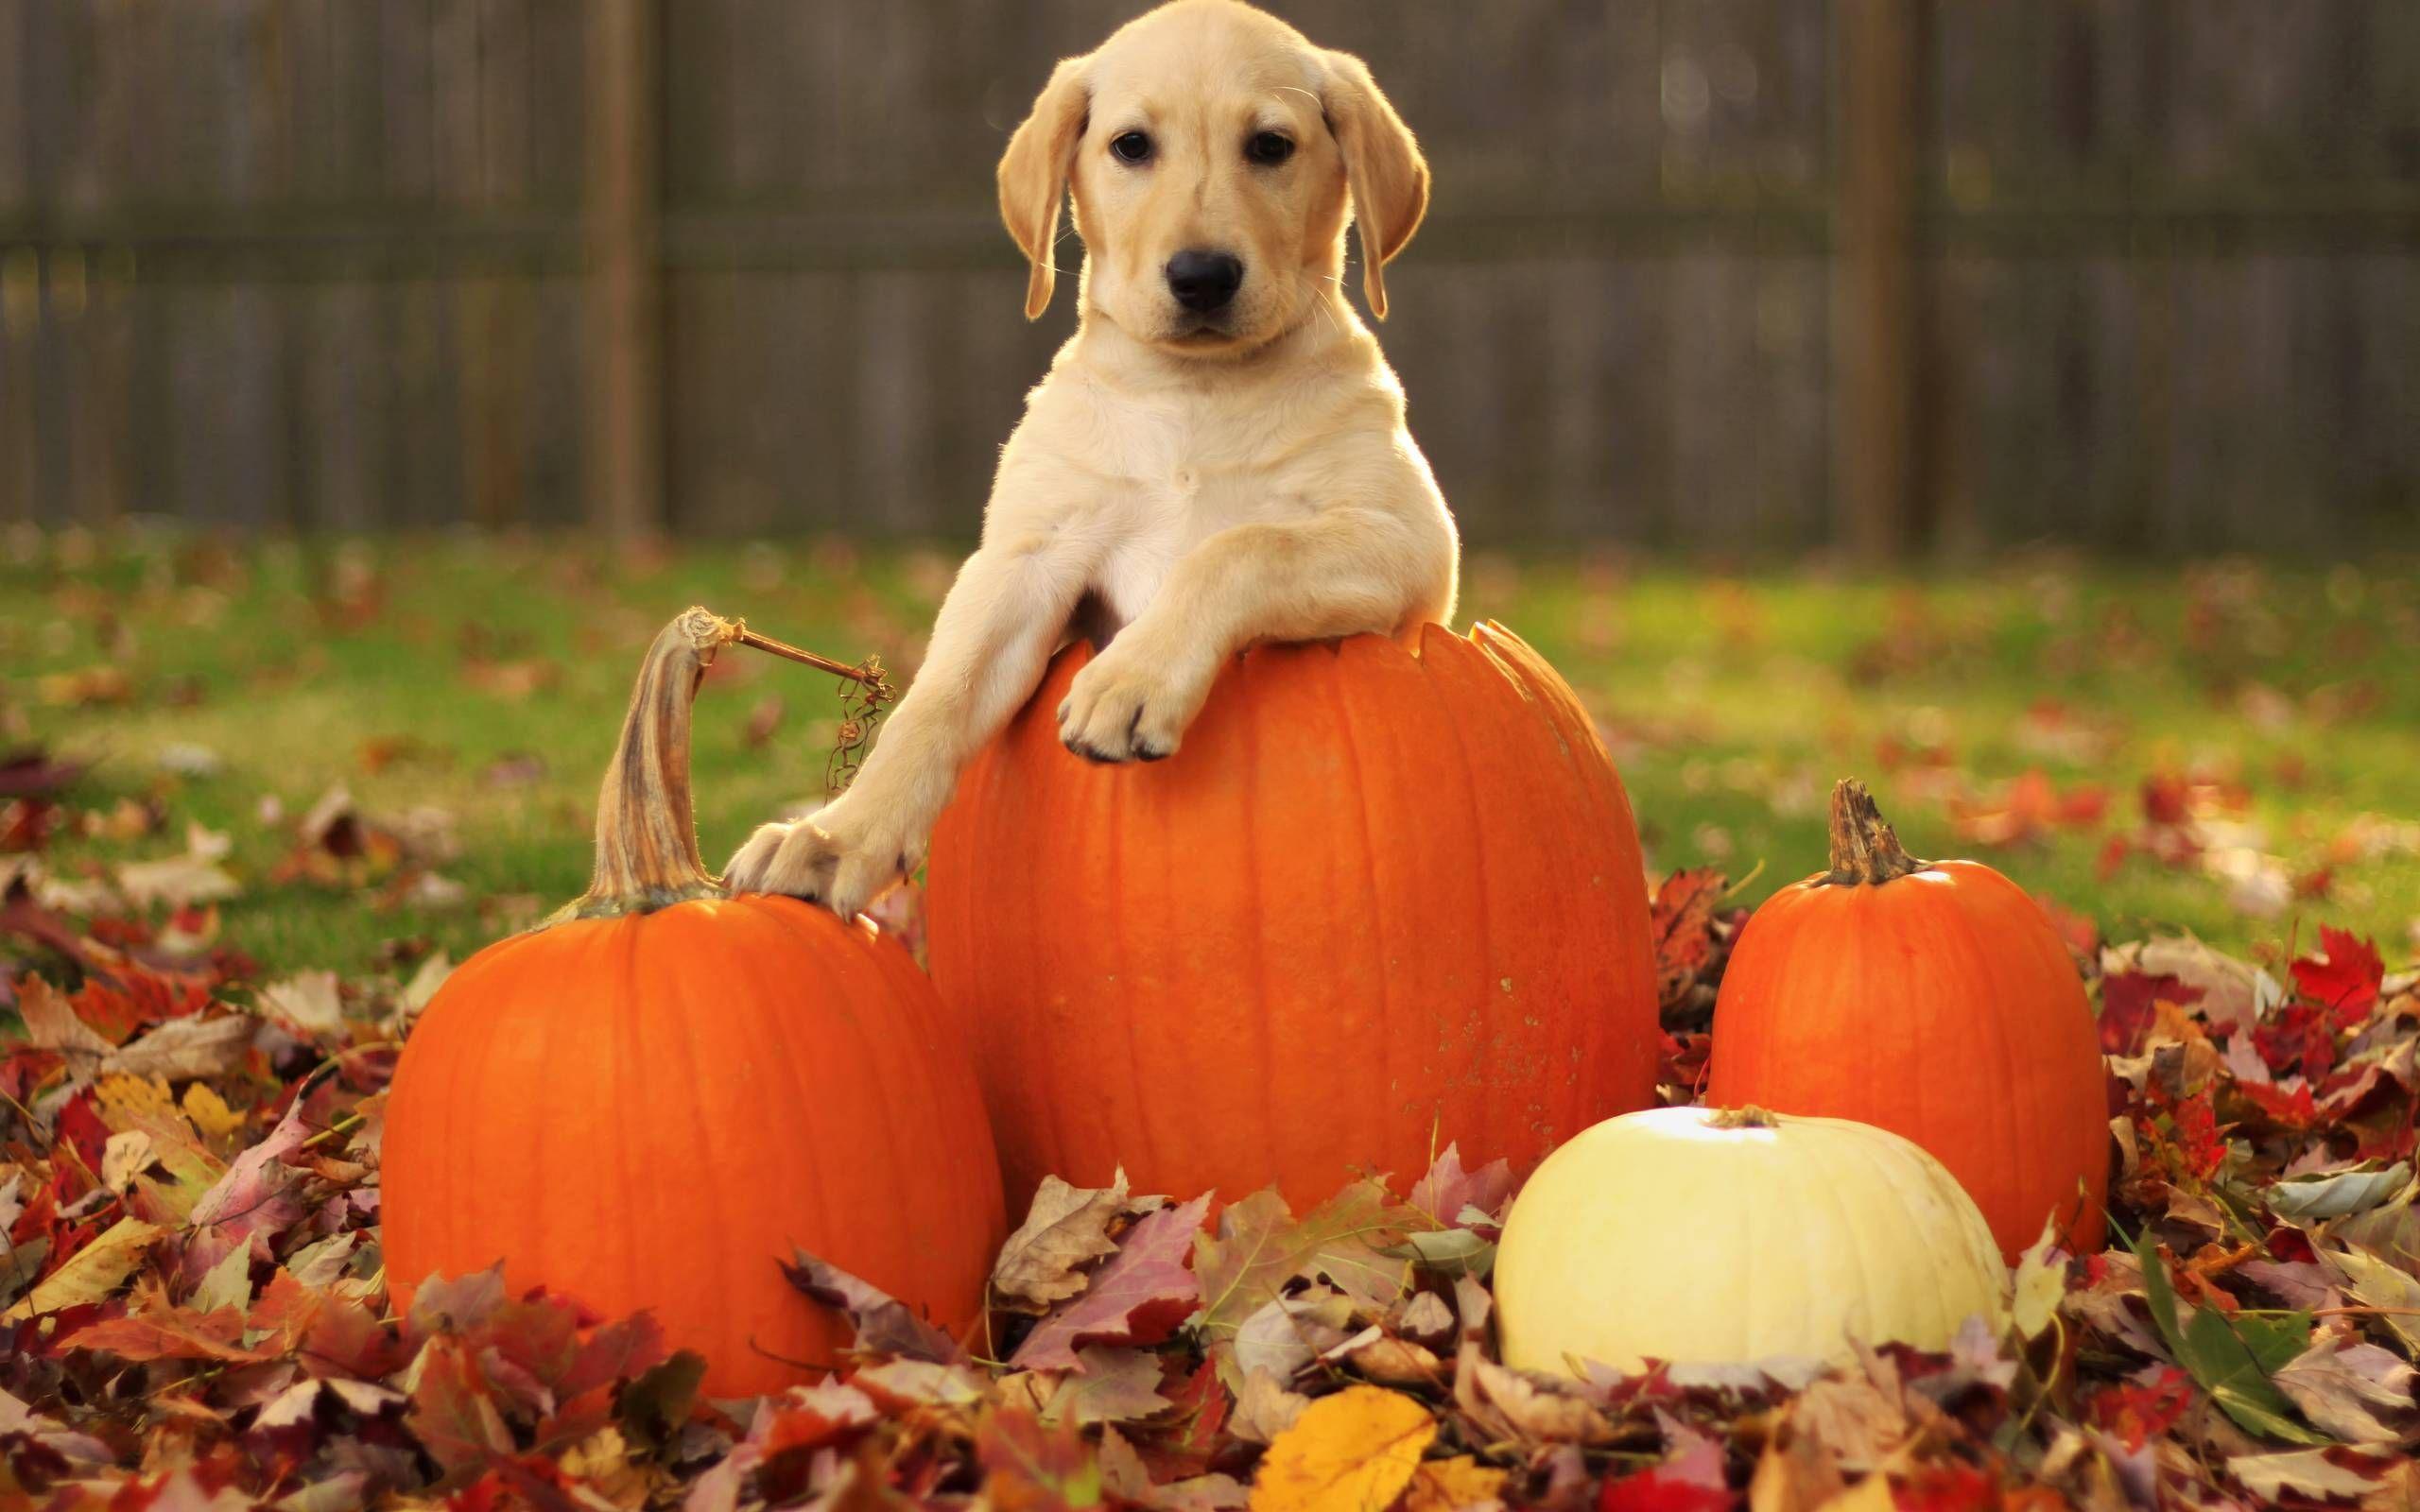 Wallpaper dog candles pumpkin Halloween images for desktop section  собаки  download